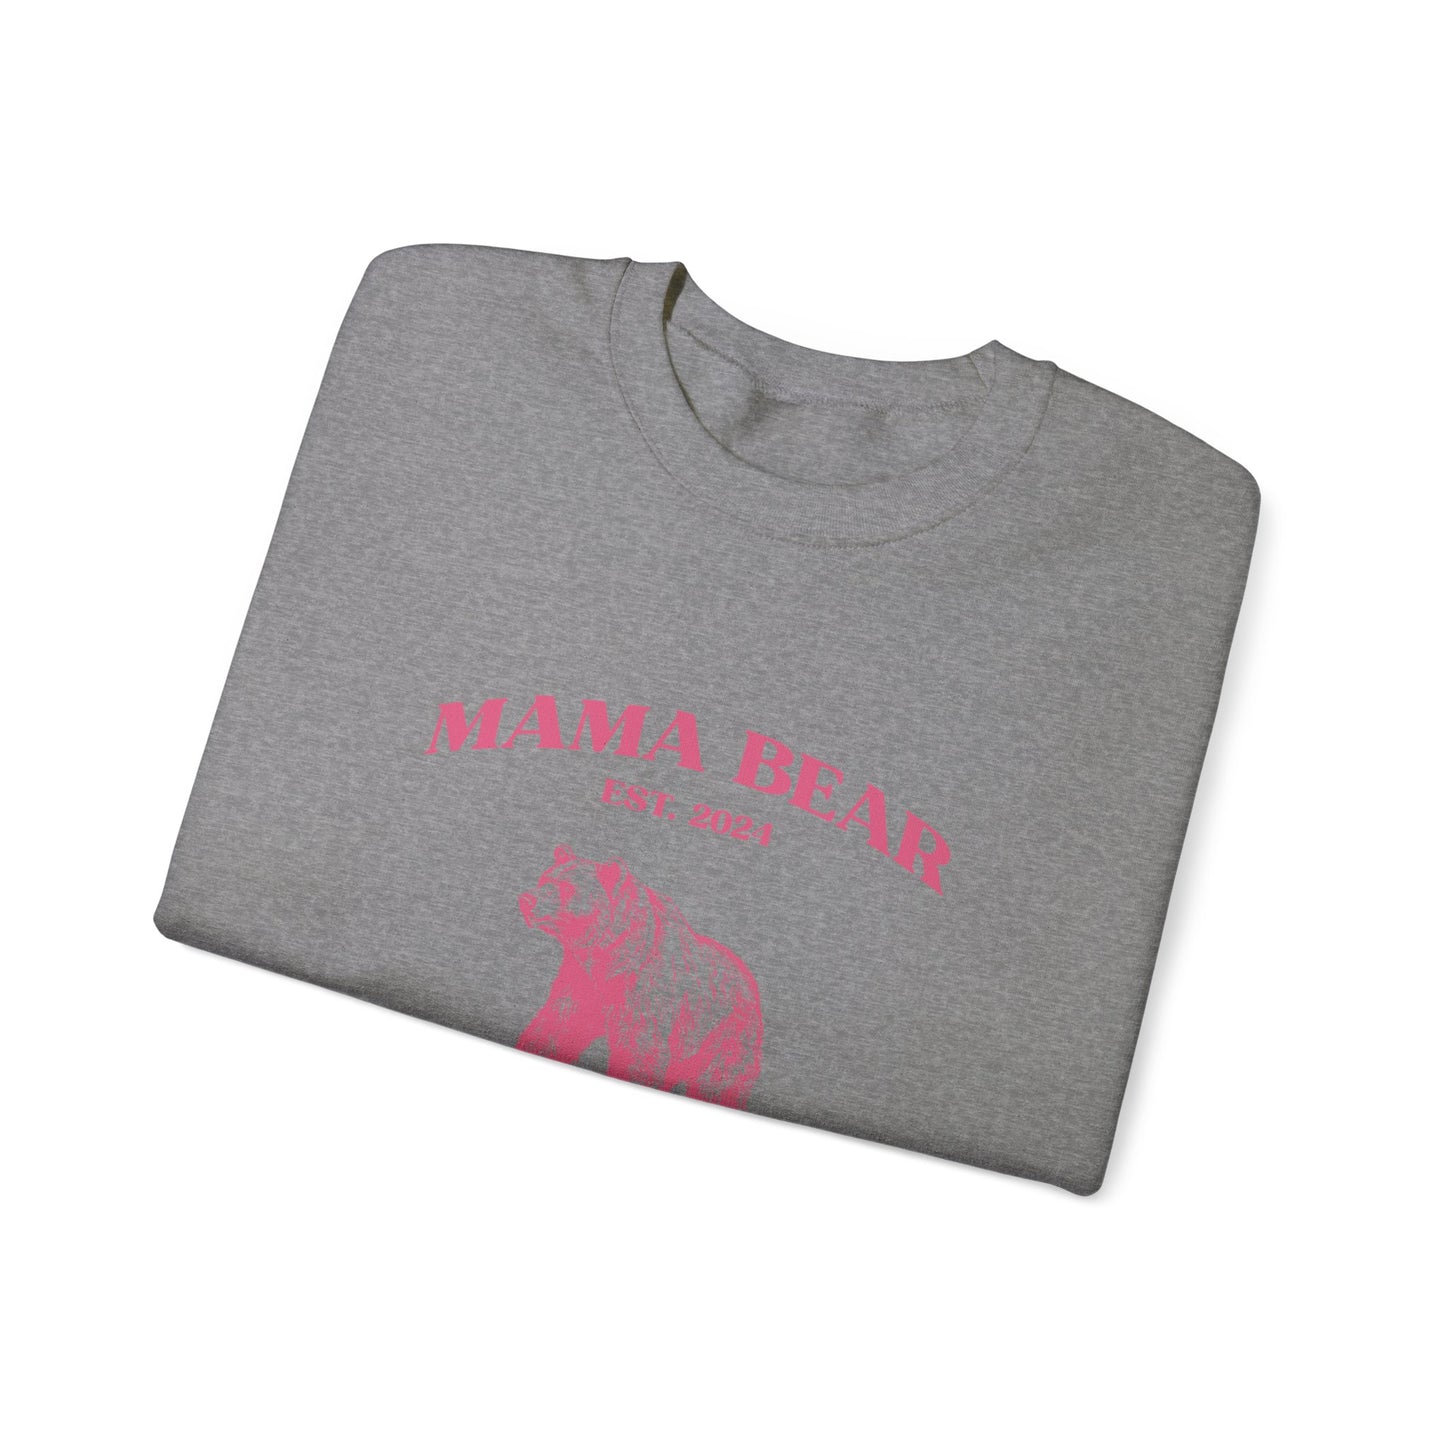 Mama Bear Shirt, Mother's Day Sweatshirt, New Mom Sweatshirt, Pregnancy Announcement Sweatshirt Gift Shirt for Mama, Pregnant Shirt, S1576